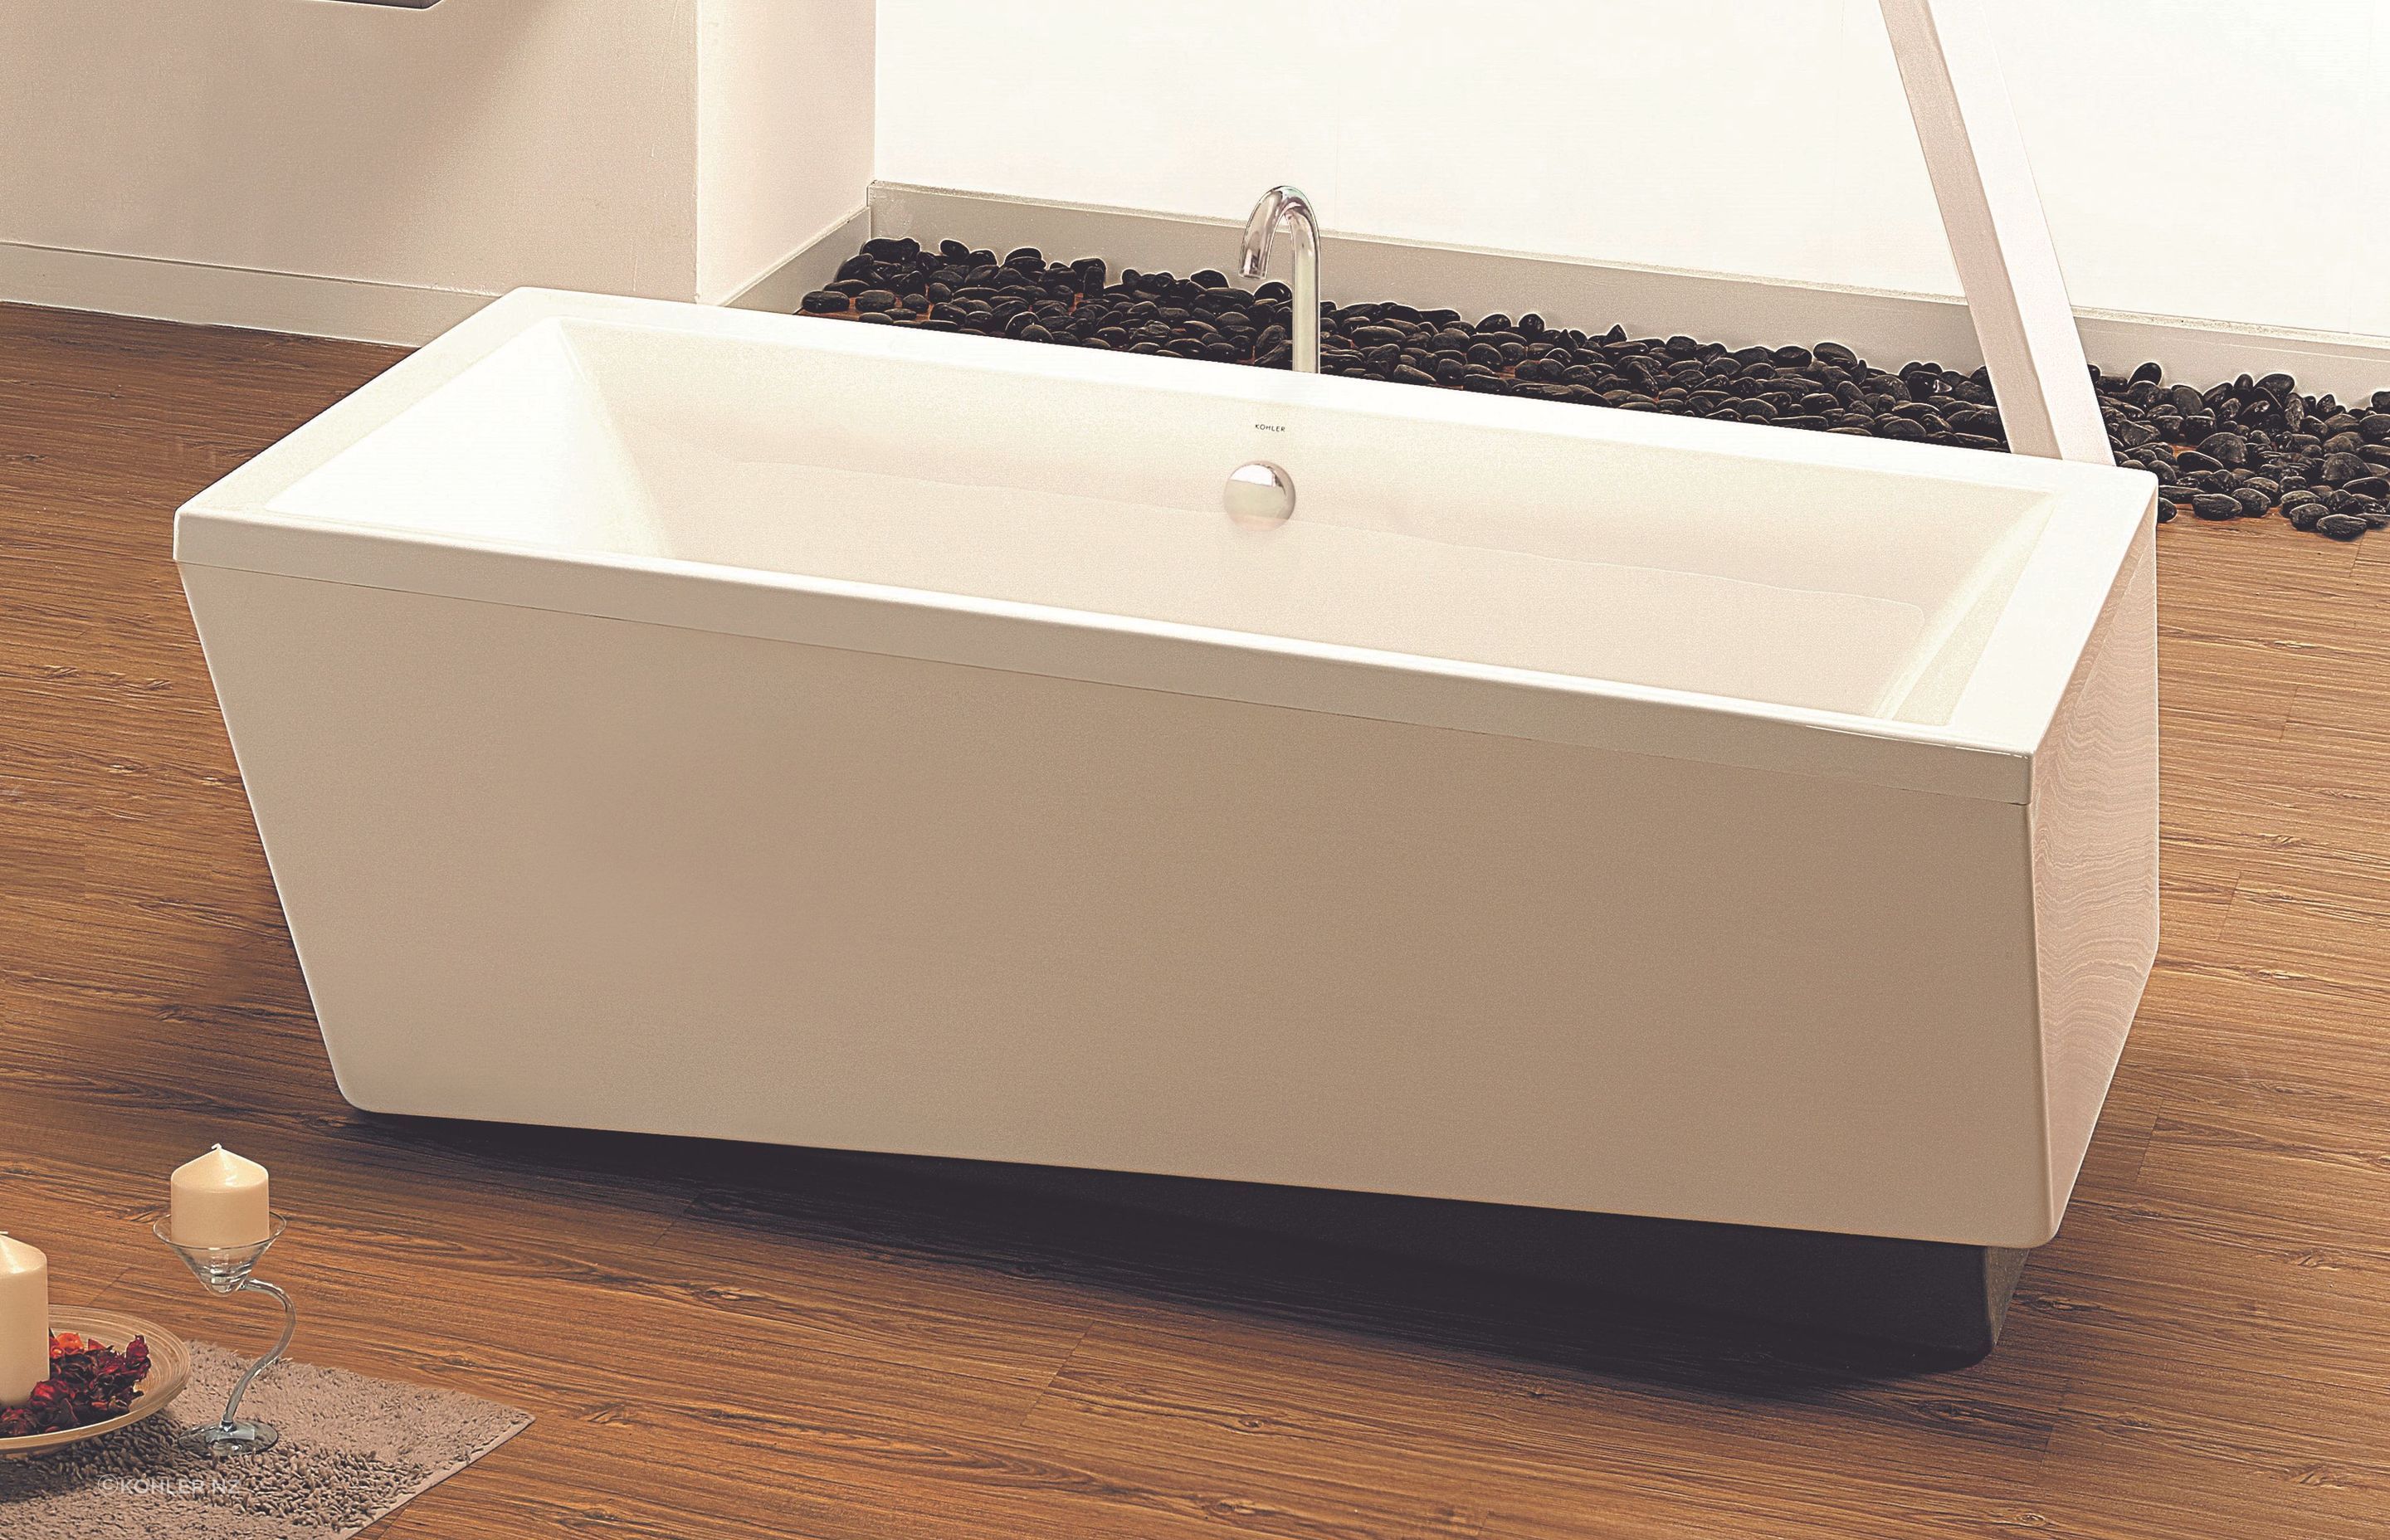 The EVOK Rectangular bath uses strong angles to create an interesting and sharp design.